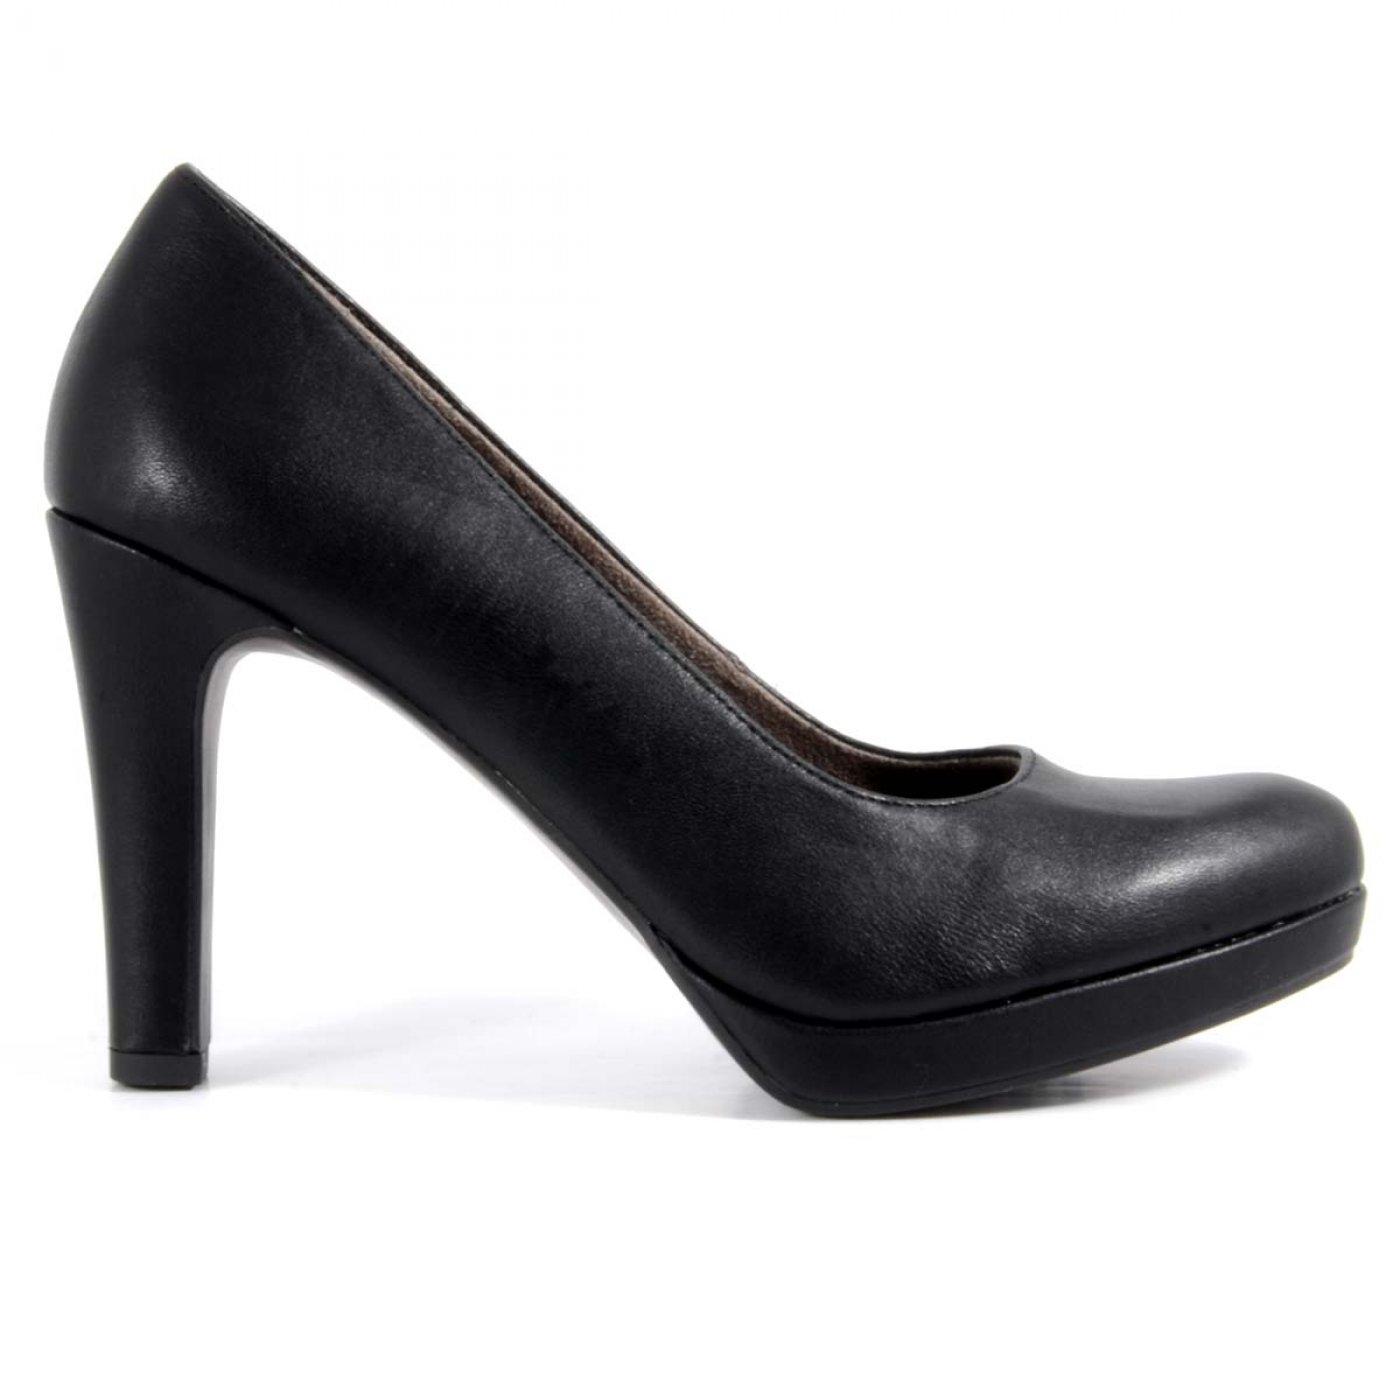 formal shoes for women -25% buy online heels / stilettos - classy black color formal shoes for IYFKKMX